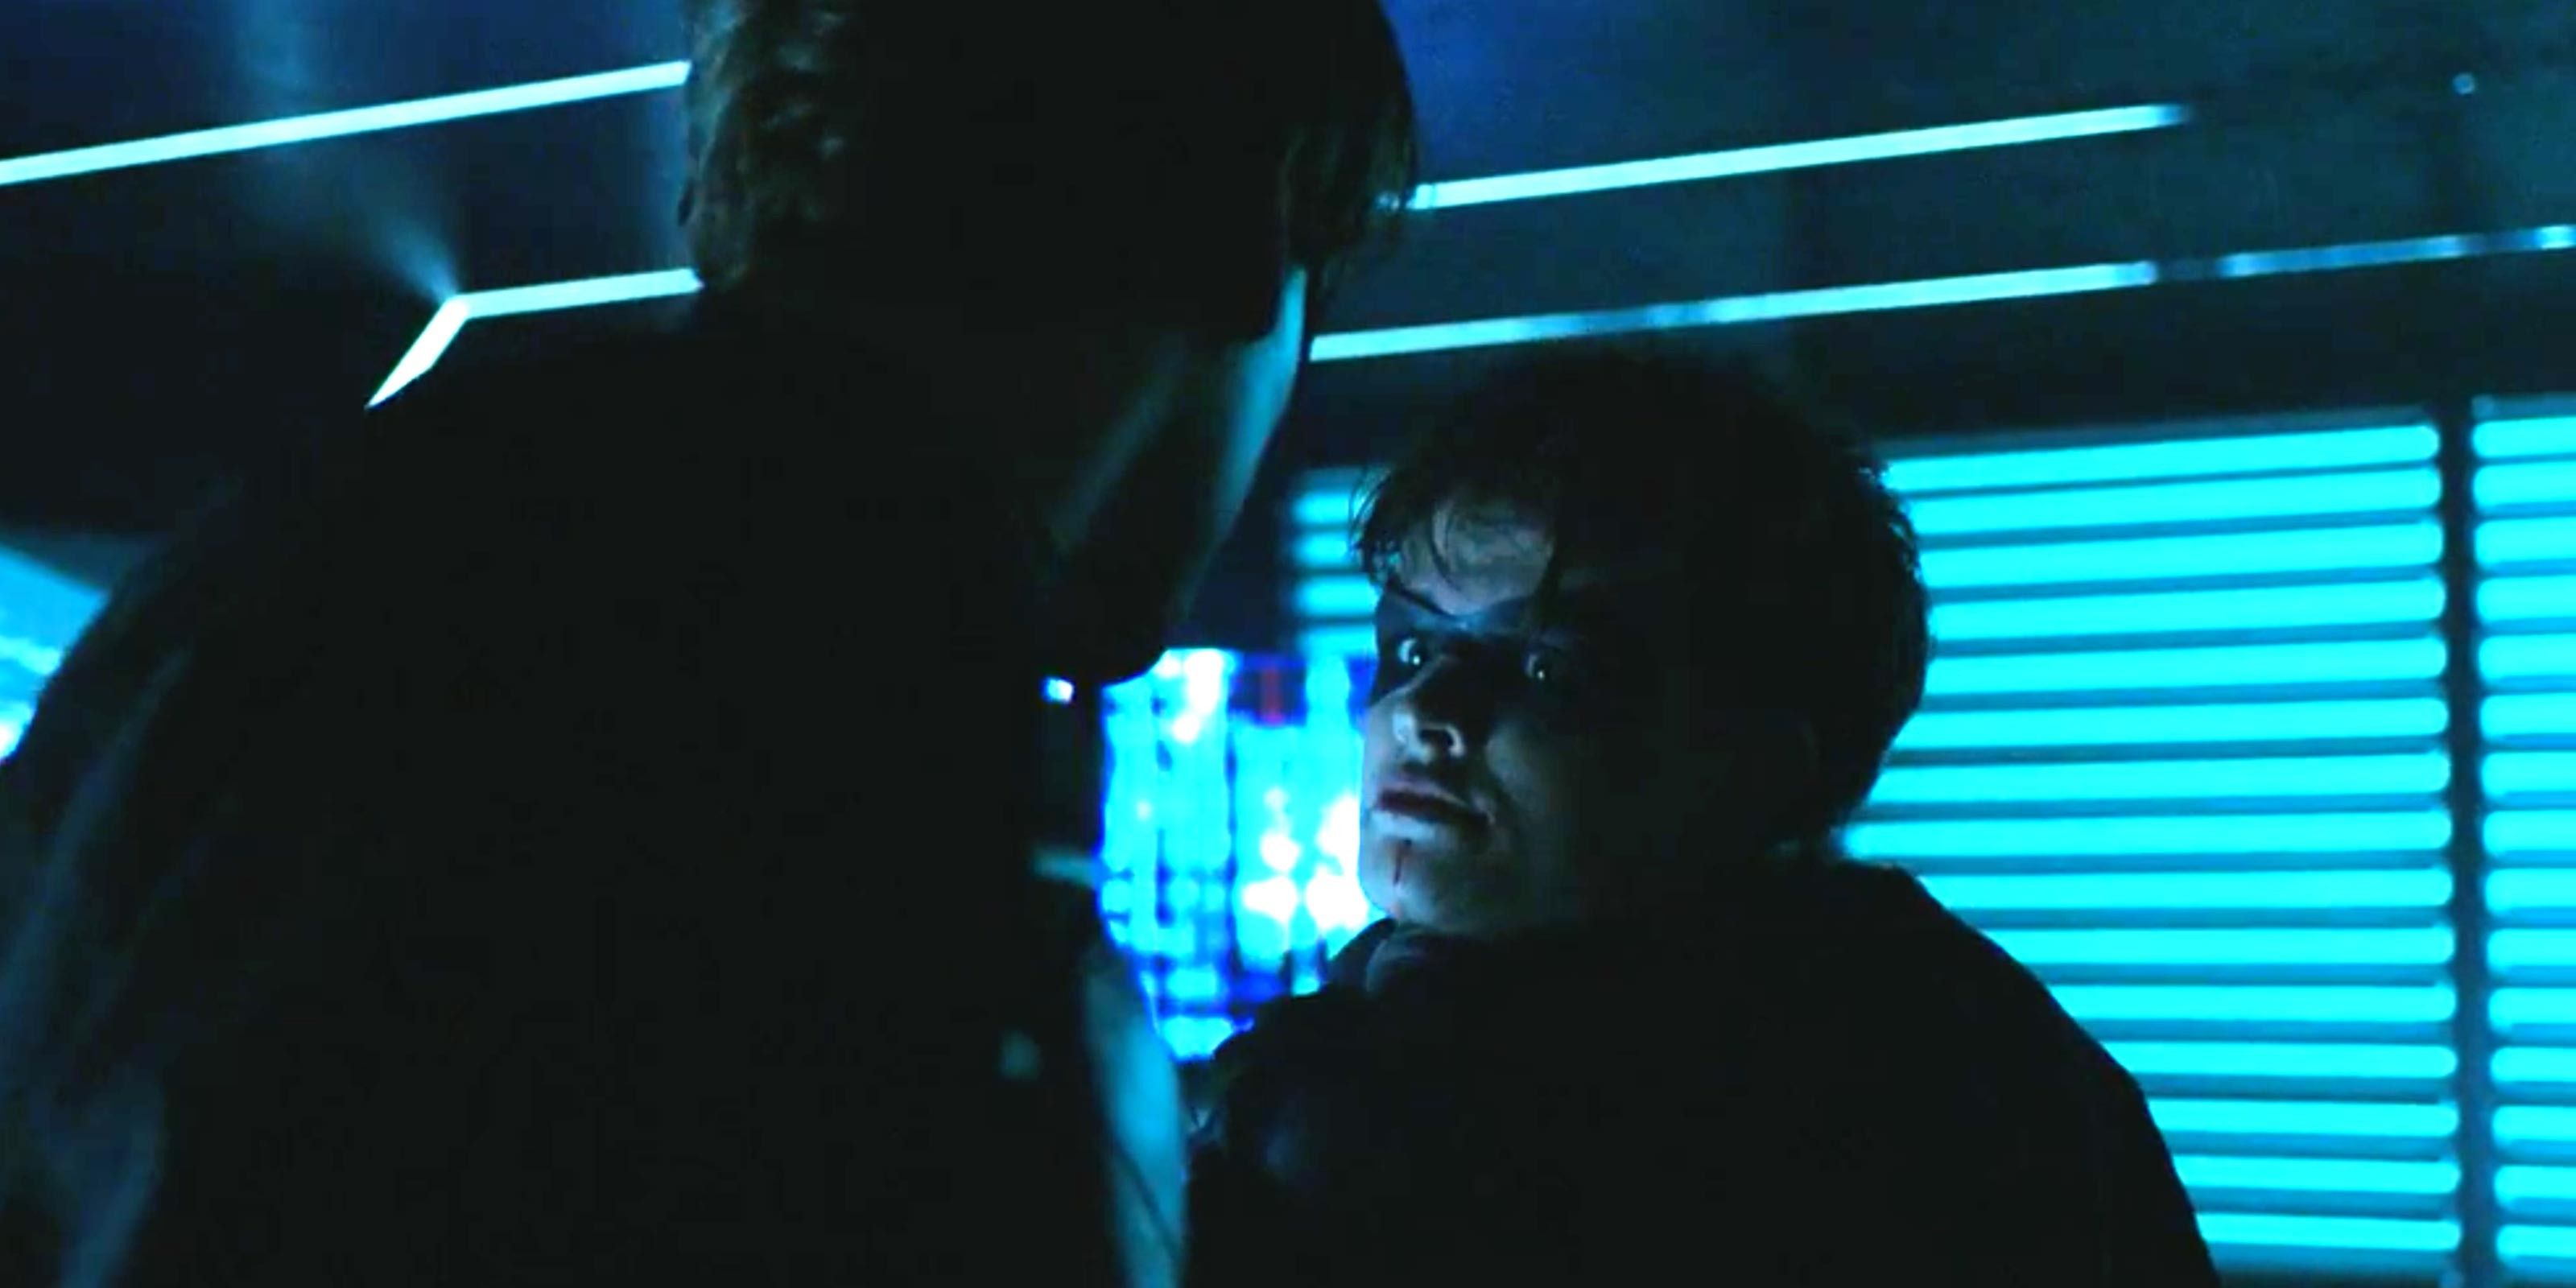 Brenton Thwaites as Dick Grayson Robin and Curran Walters as Jason Todd argue in Titans